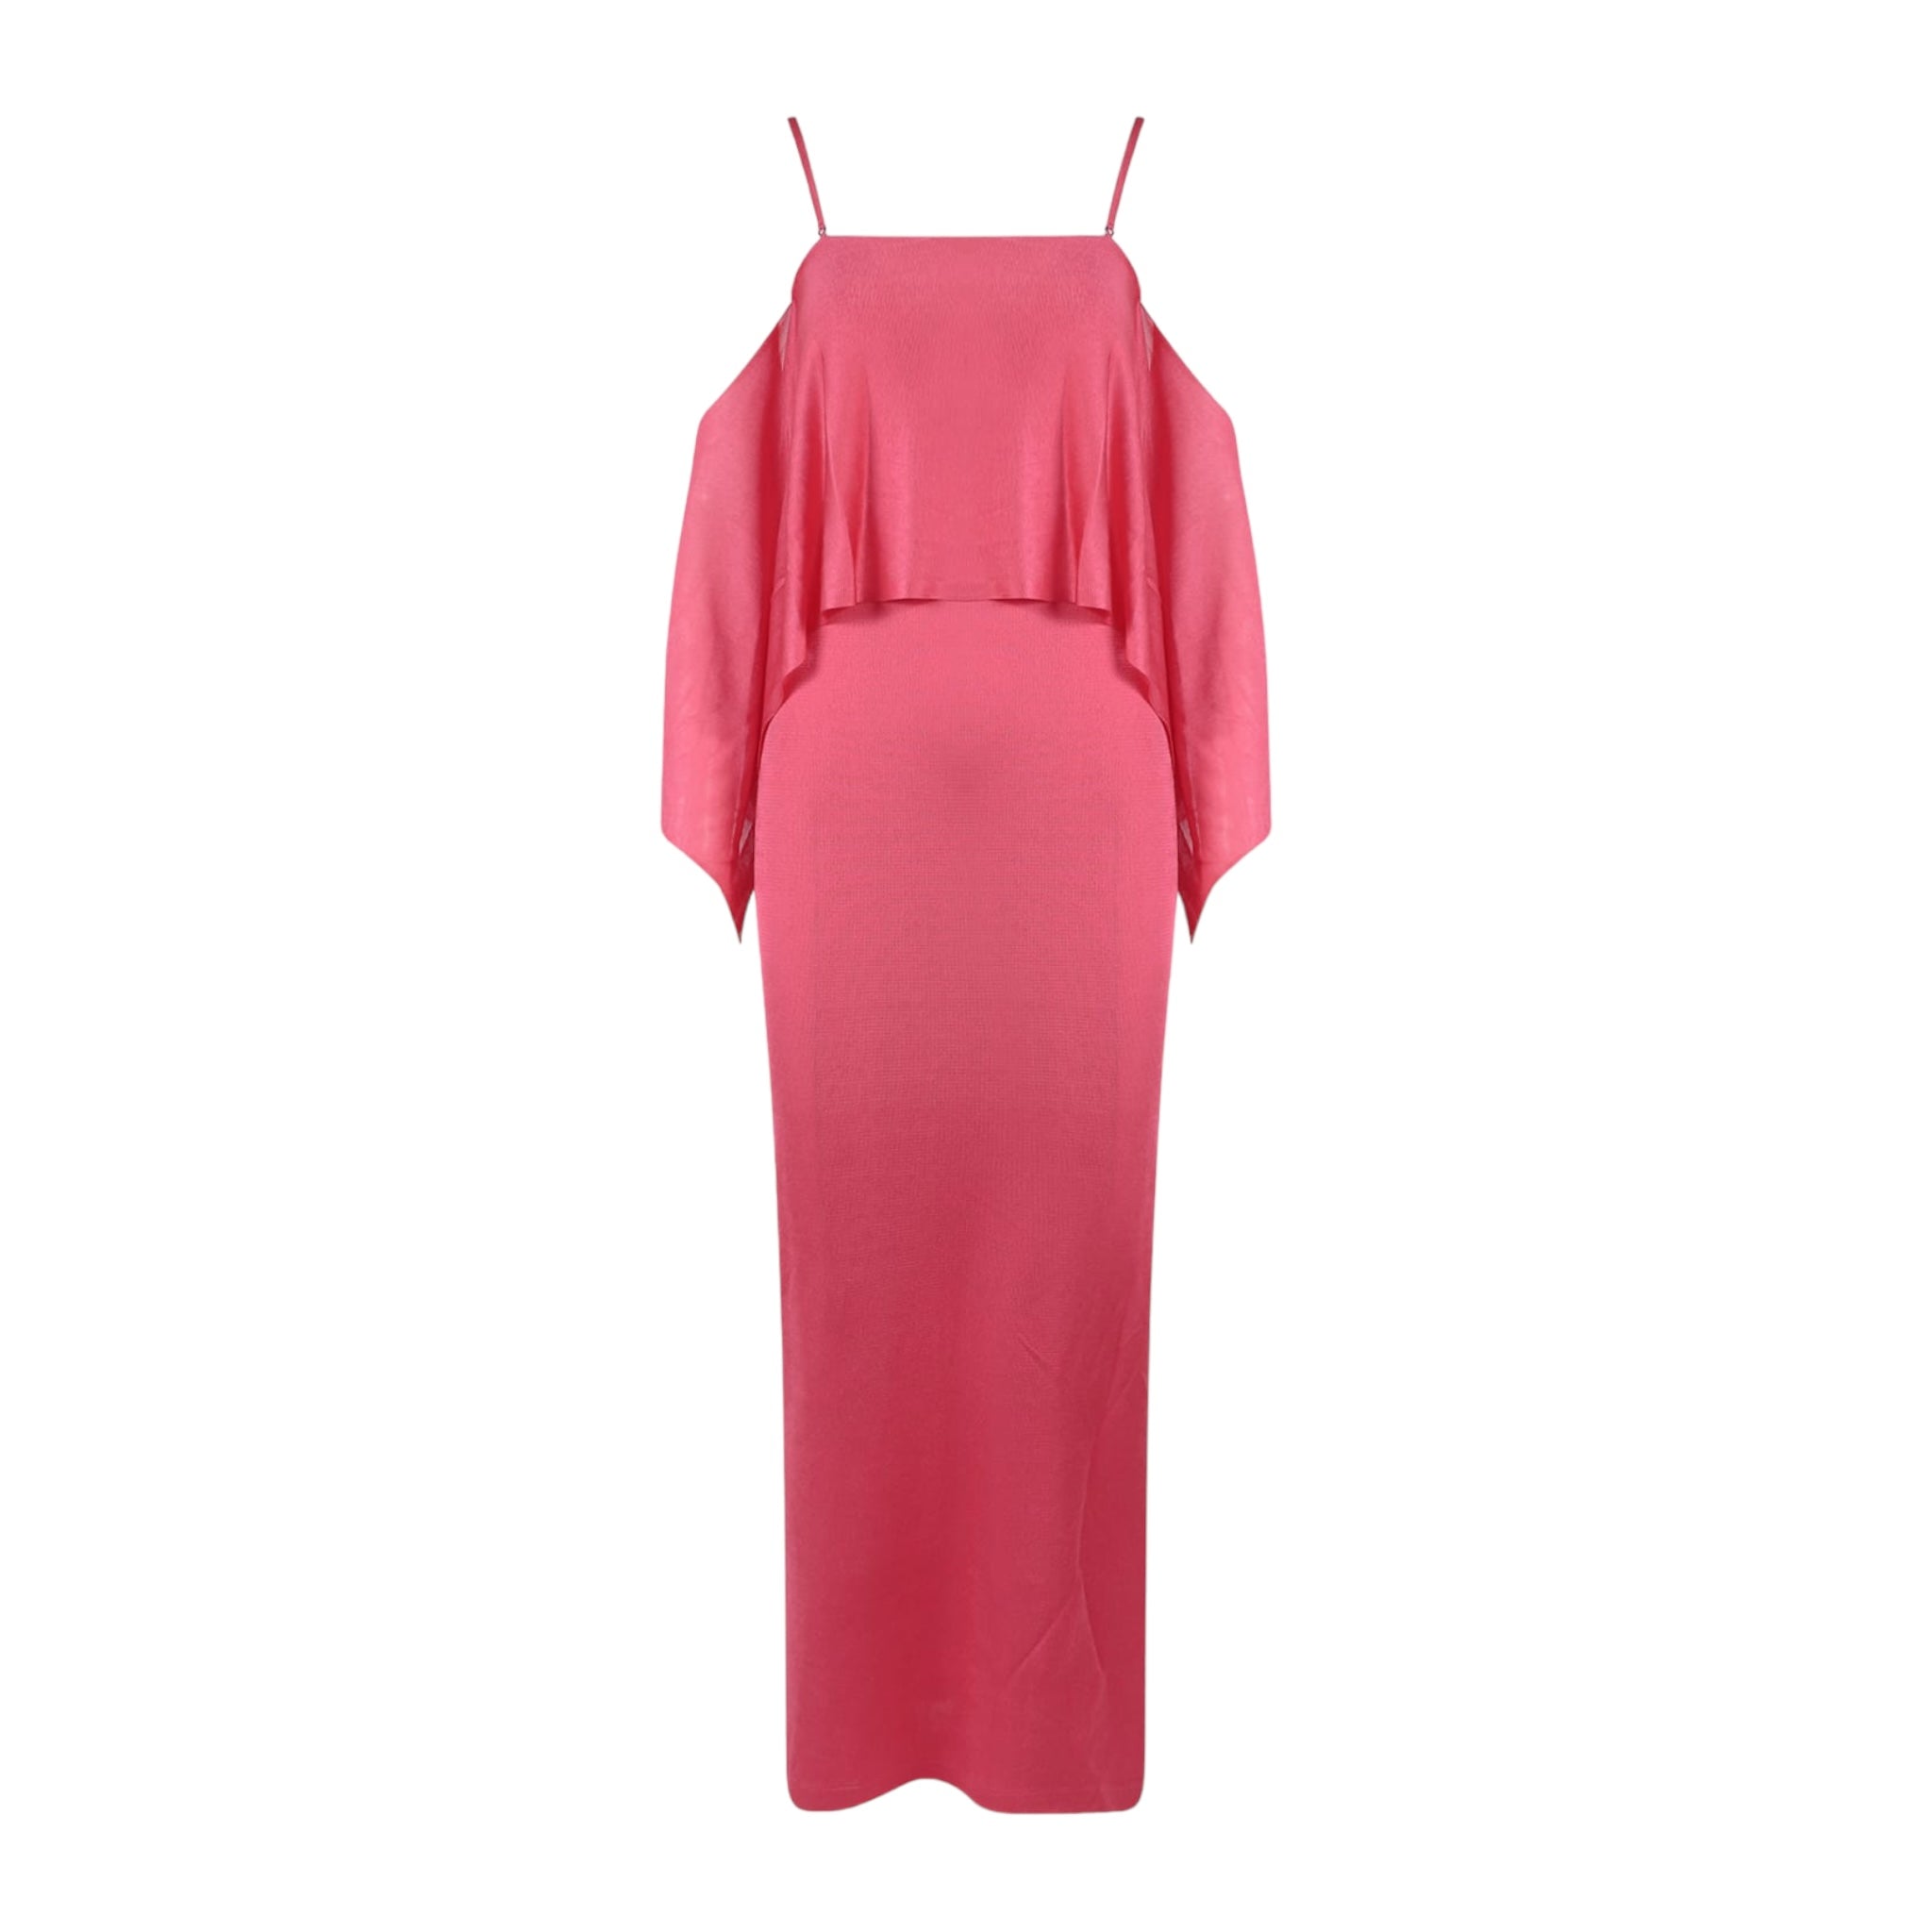 Tom Ford pink ruffle dress